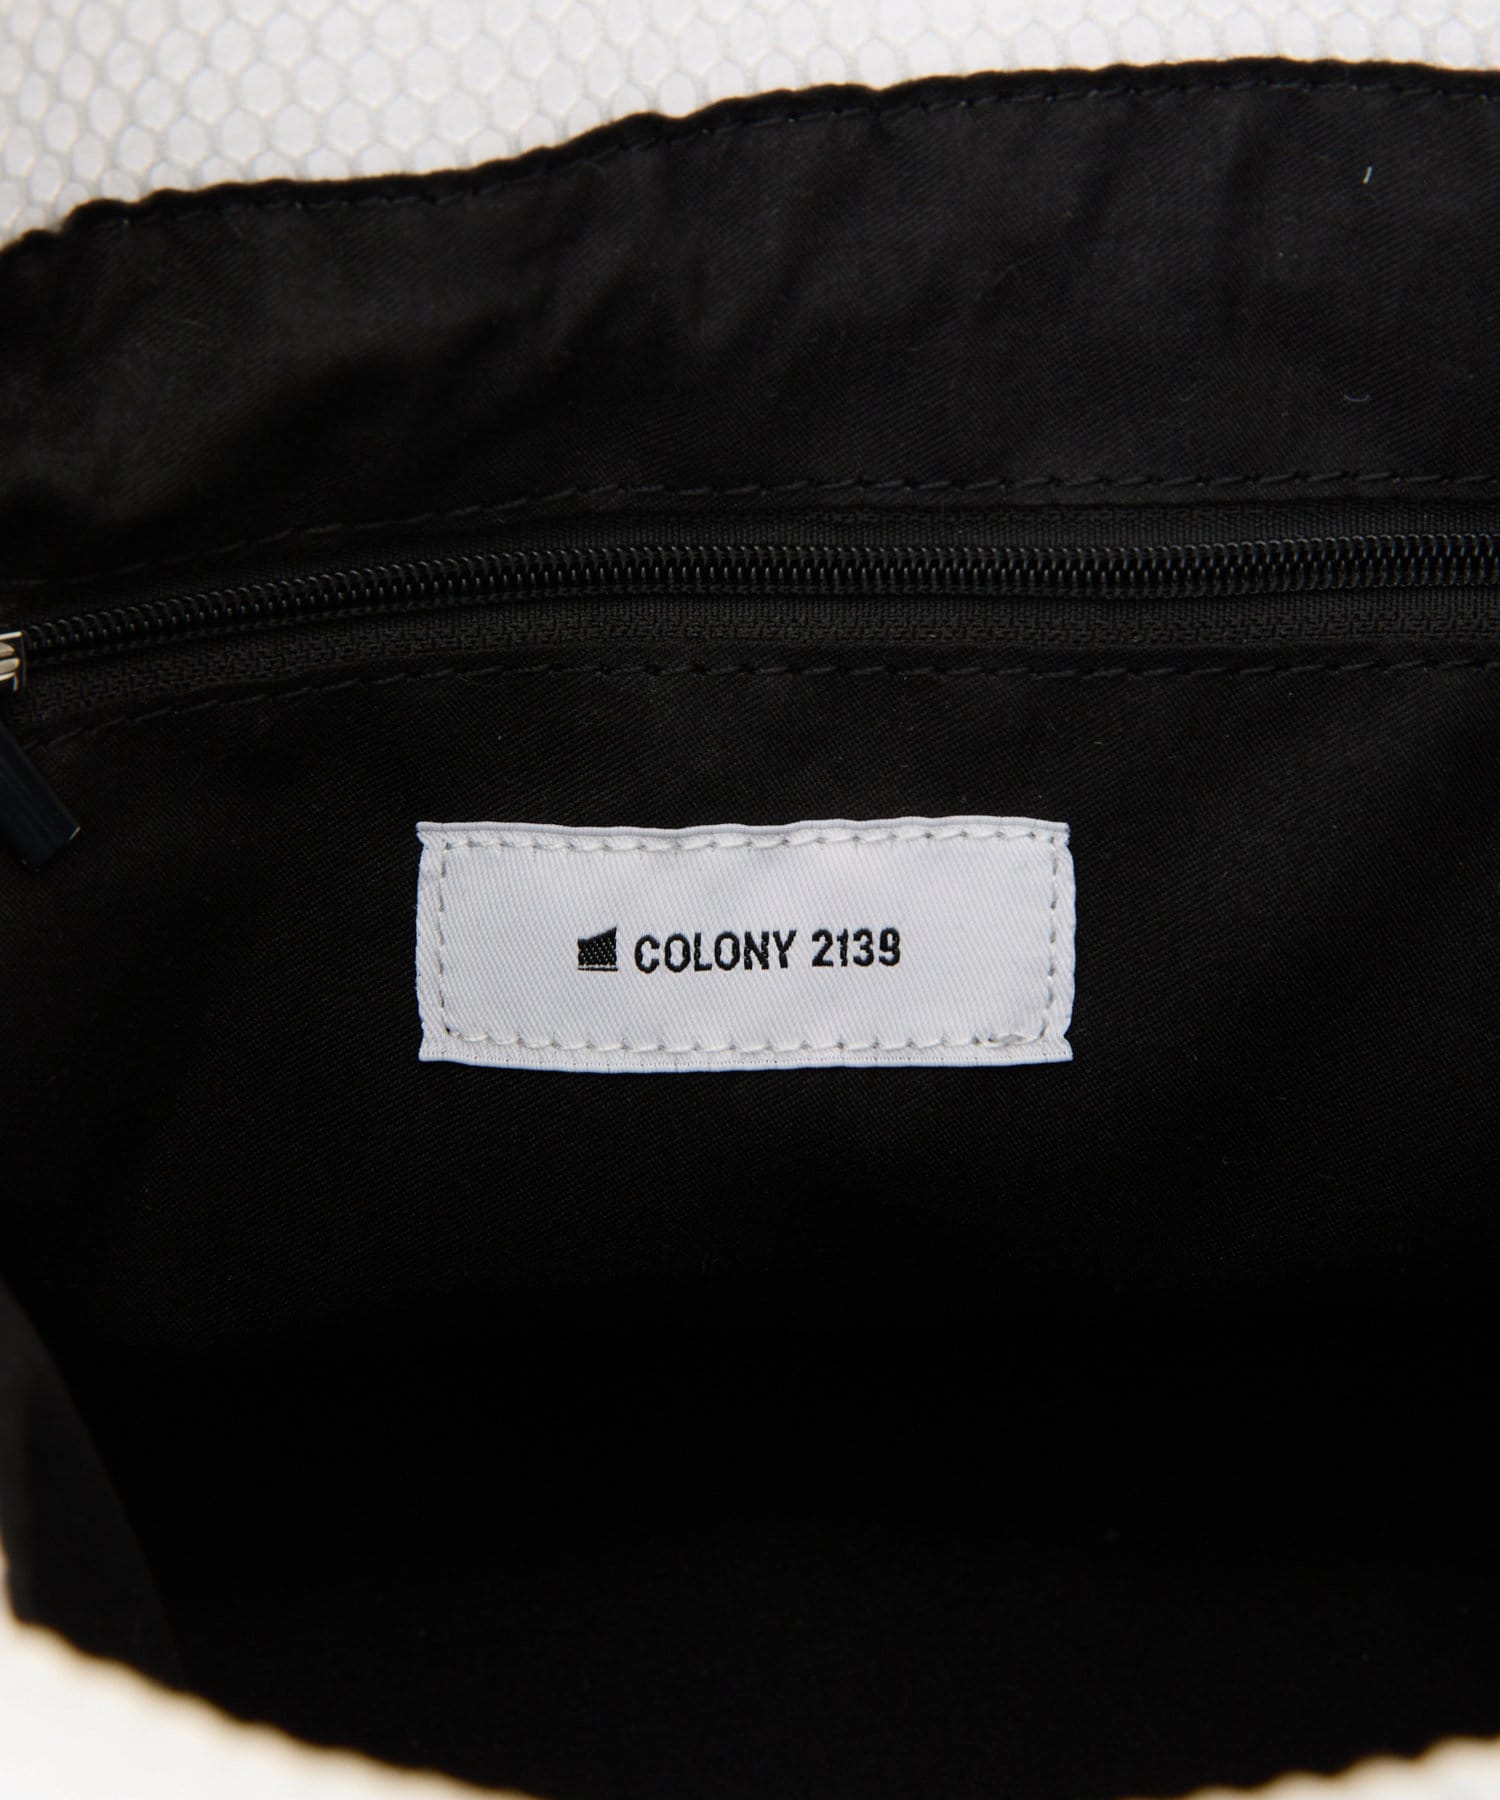 COLONY 2139(コロニー トゥーワンスリーナイン) プレートメッシュ巾着ショルダー